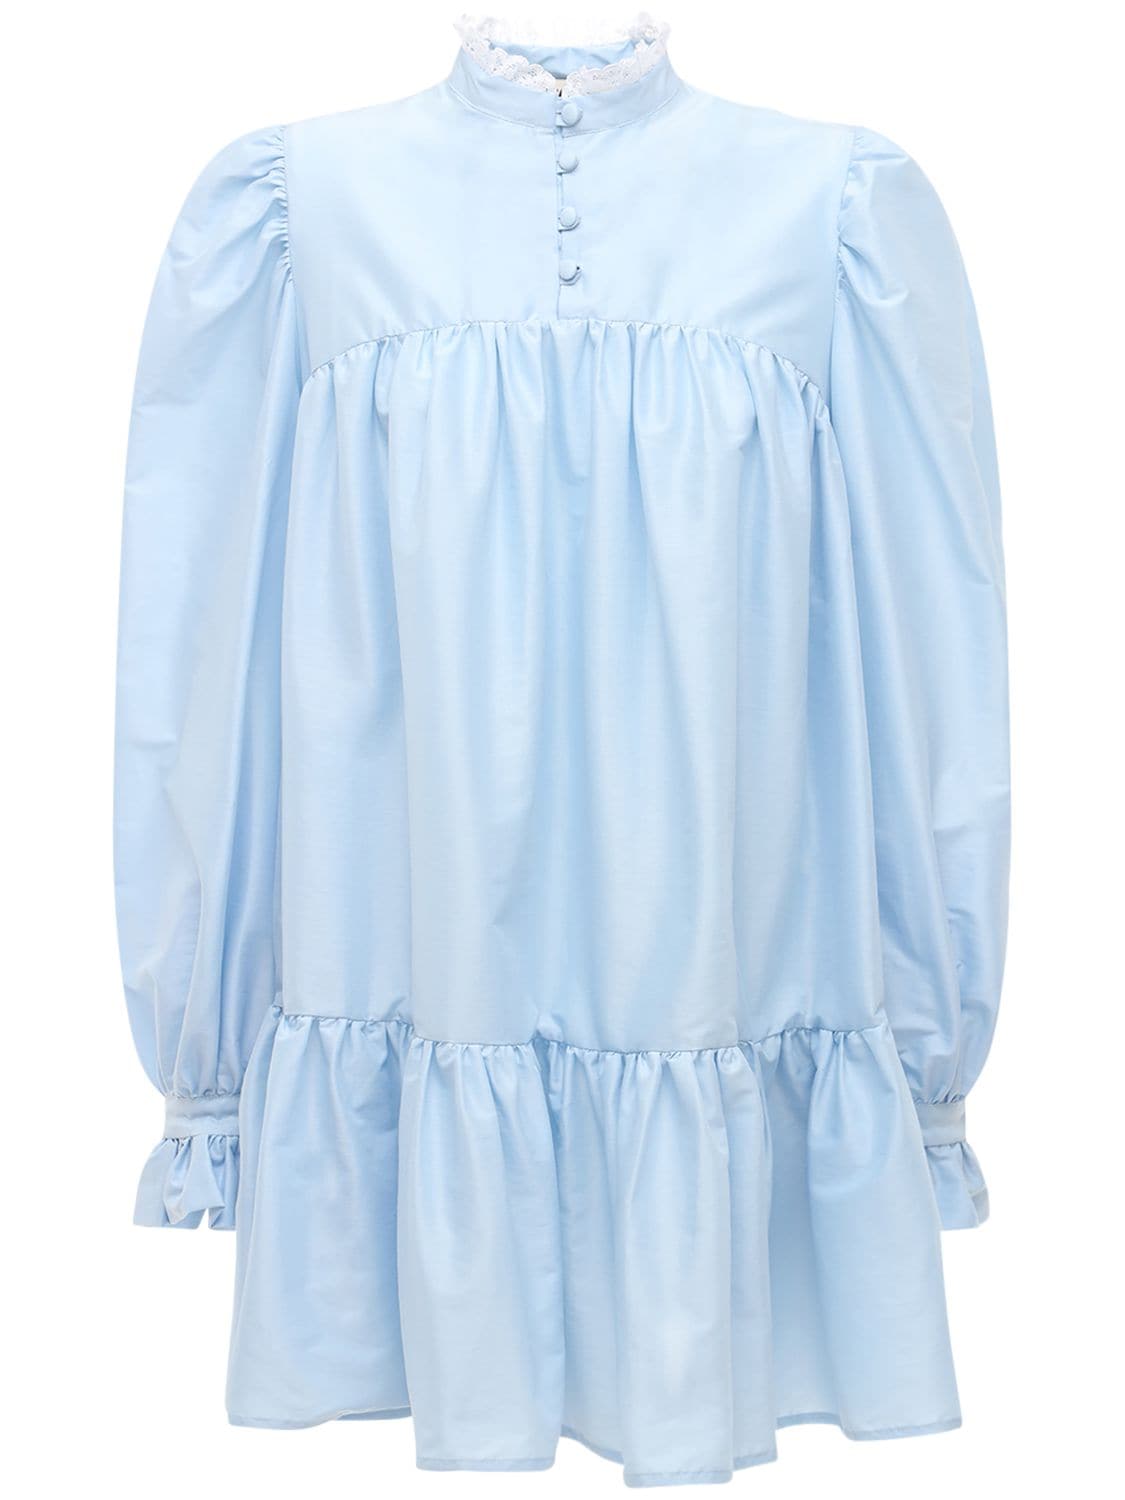 AVAVAV Lvr Exclusive Ruffled Cotton Dress